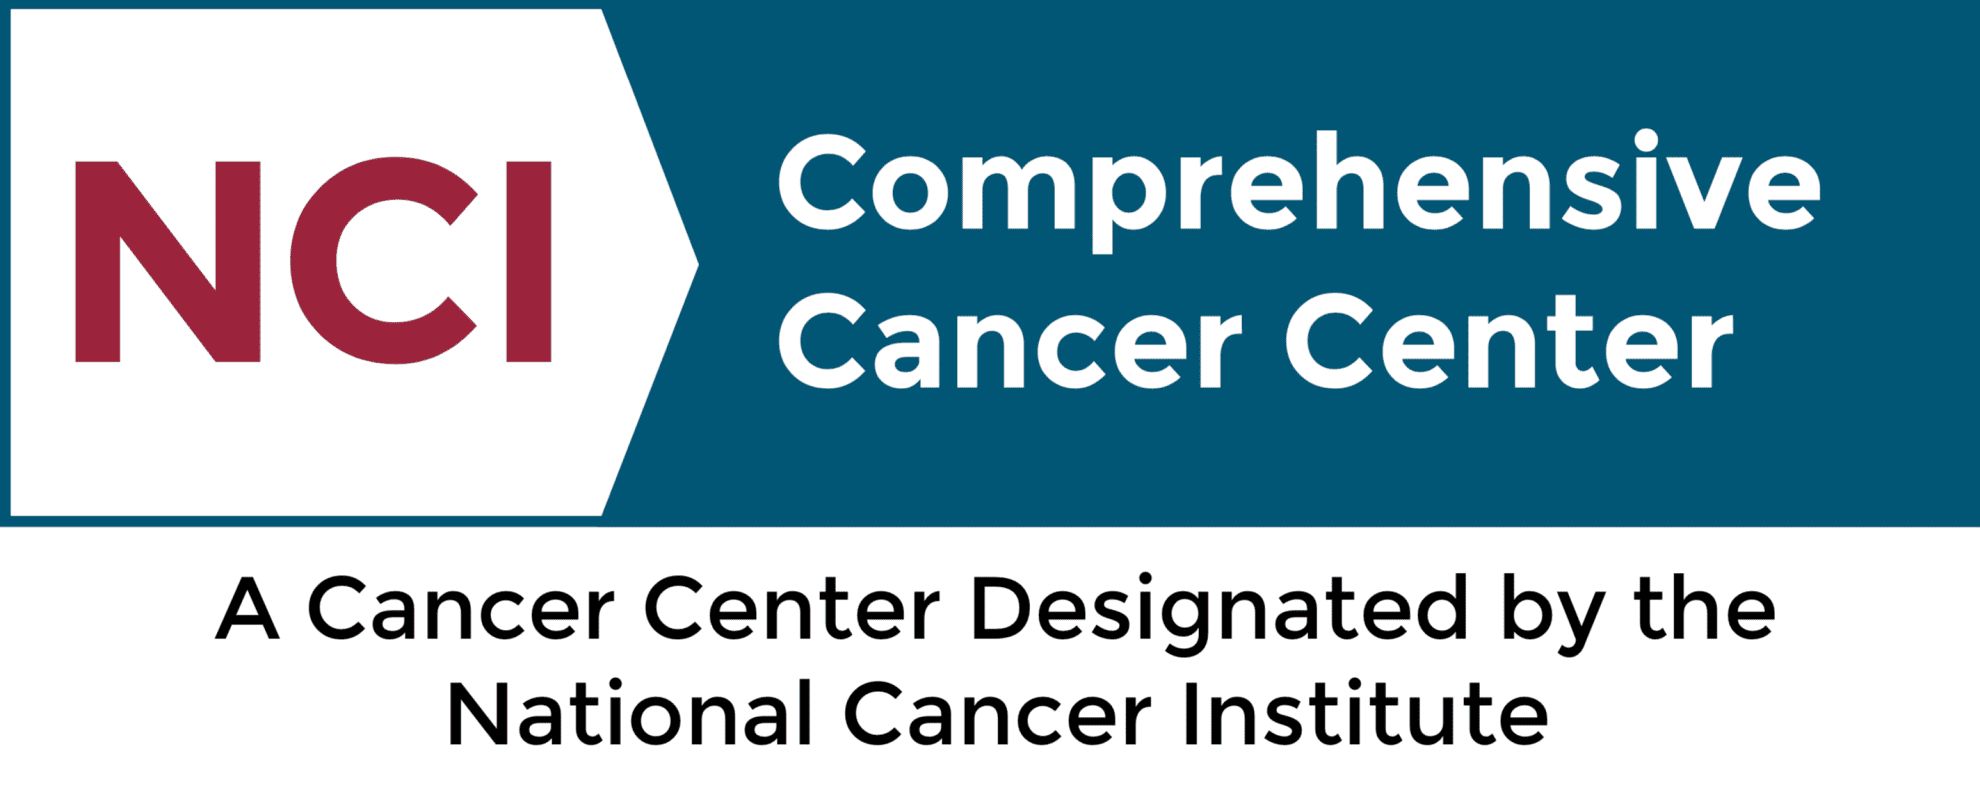 NCI_ComprehensiveCancerCenter_badge Small